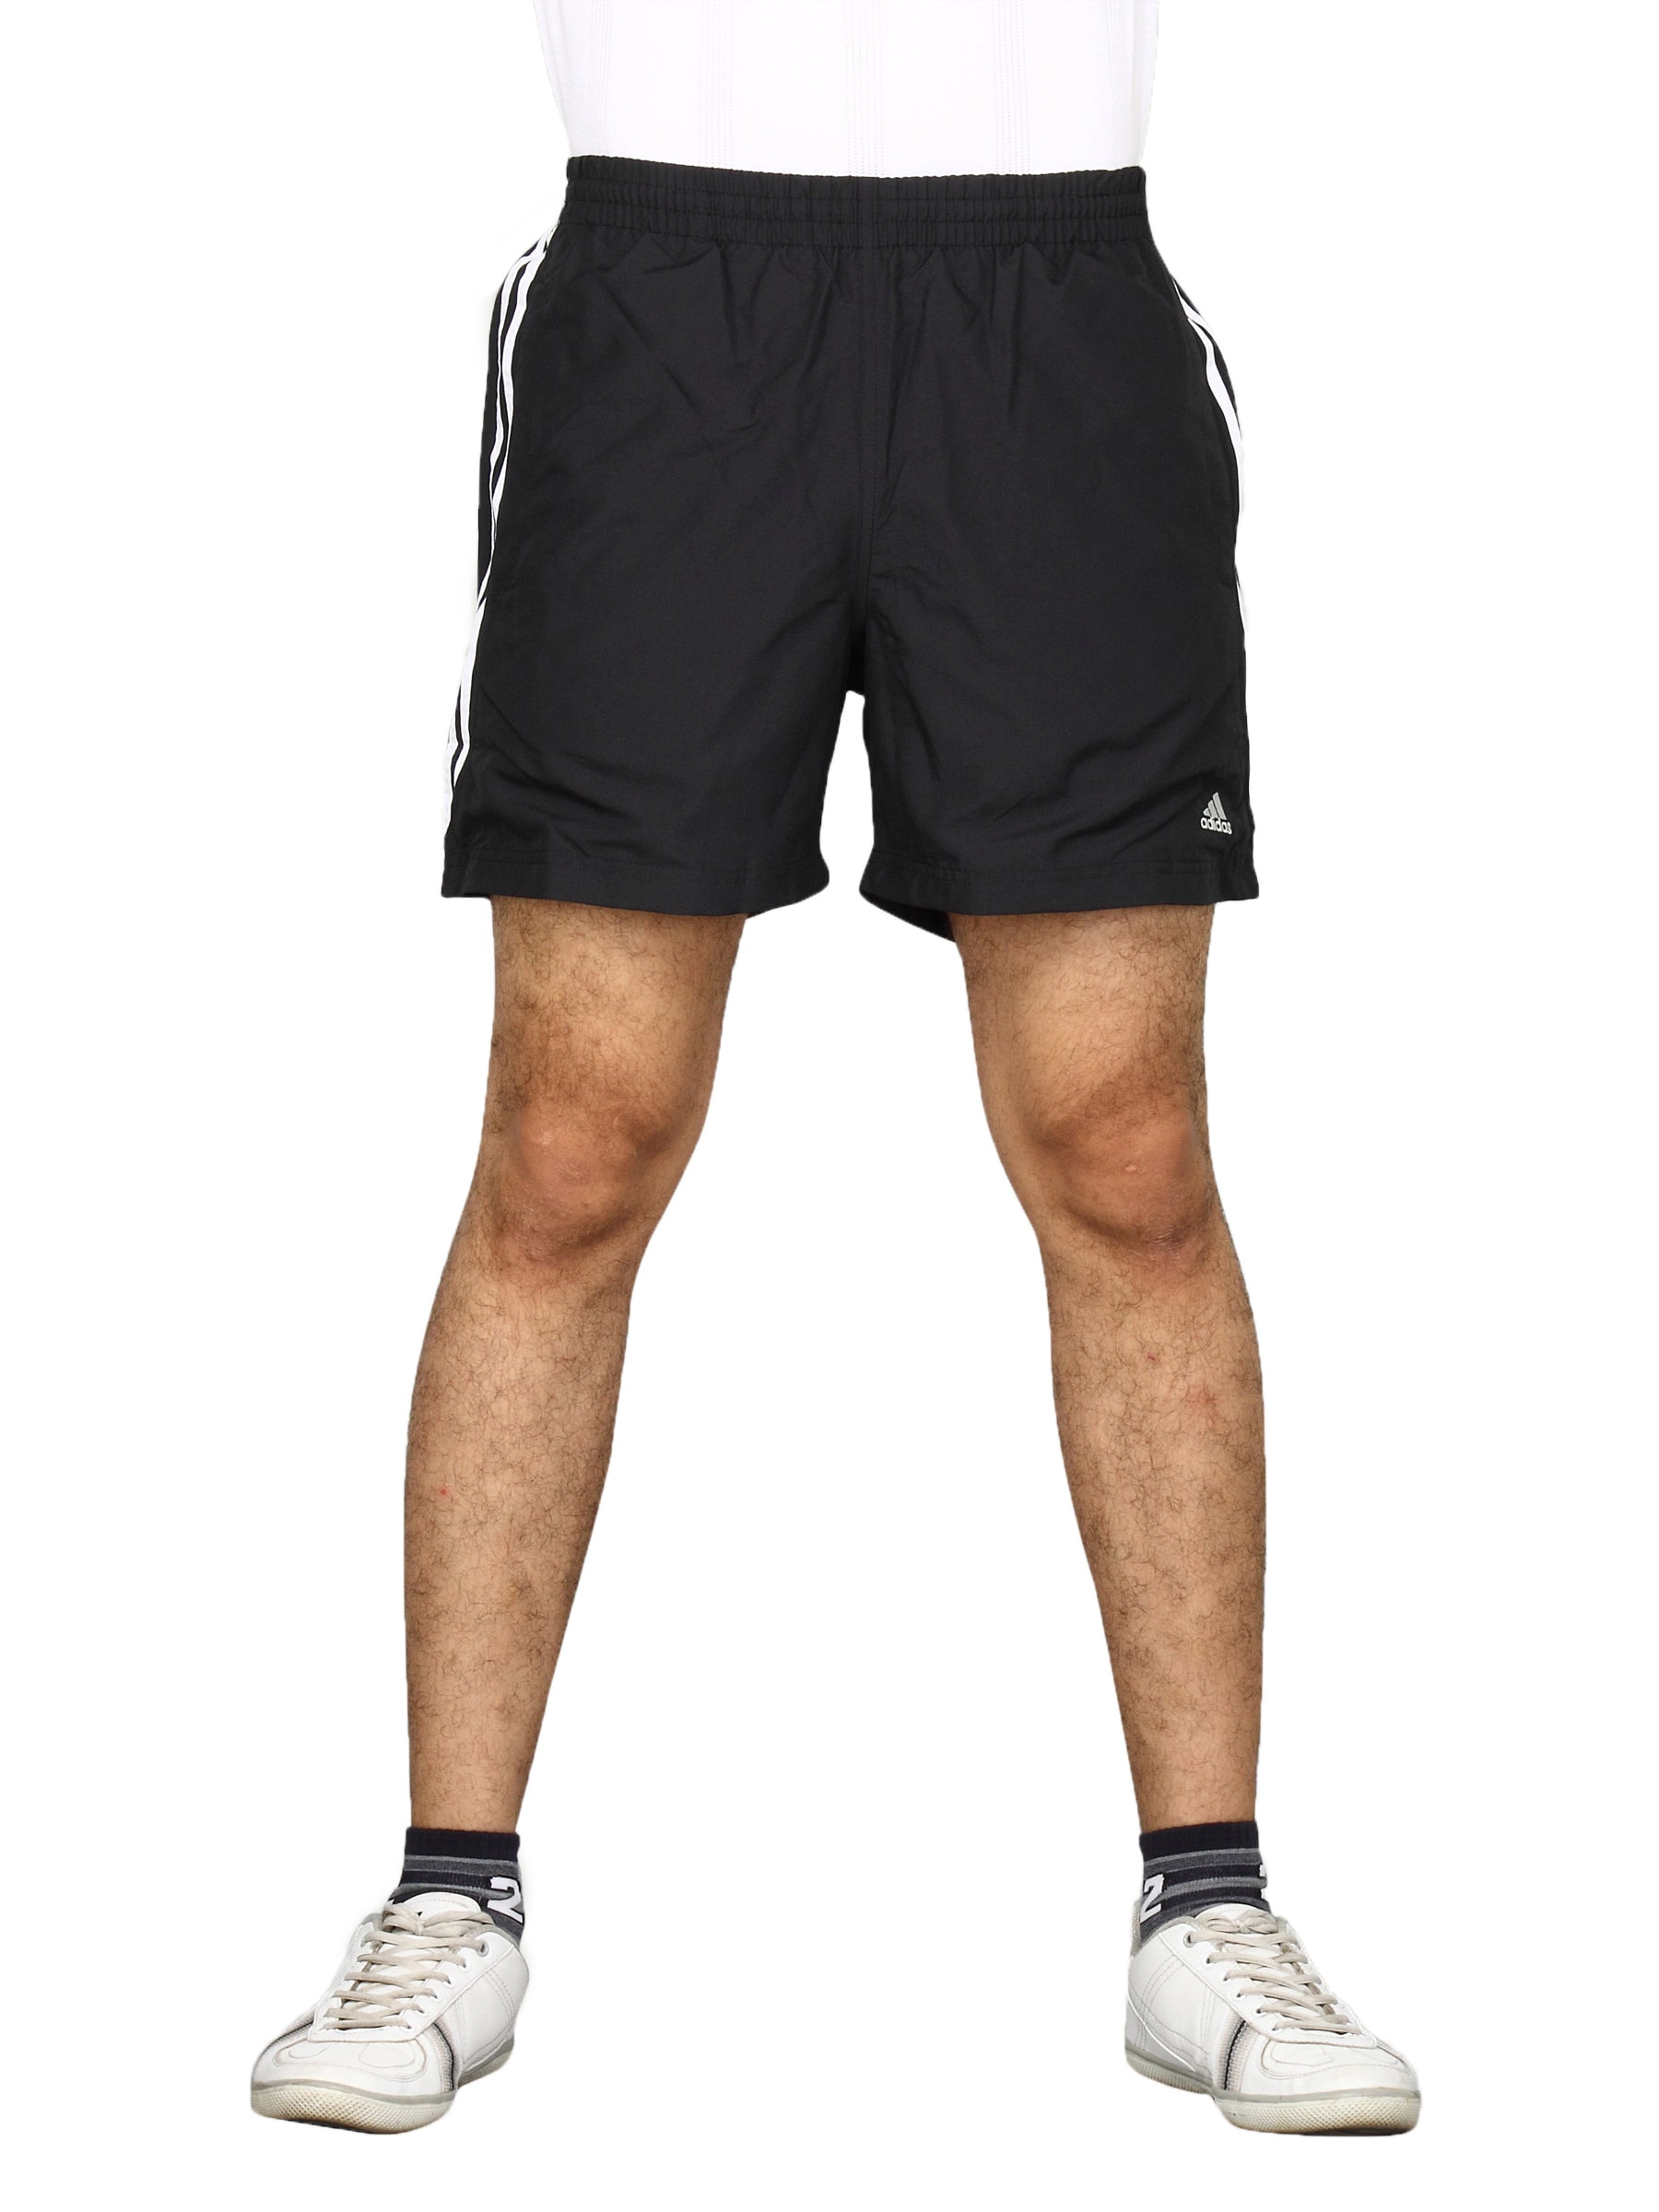 ADIDAS Men's Chelsea Striped Black Shorts